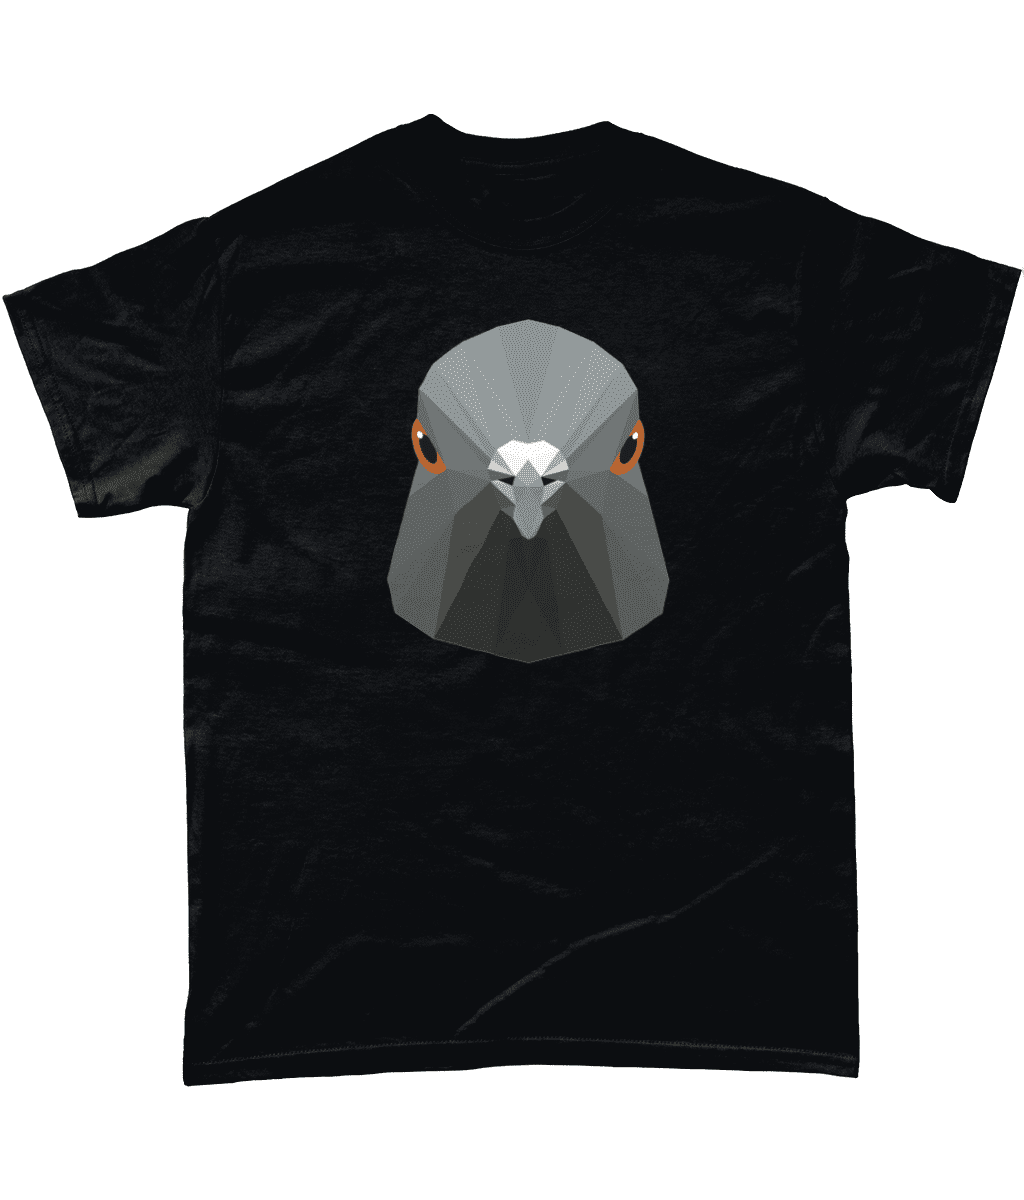 Low Poly Pigeon T Shirt Black